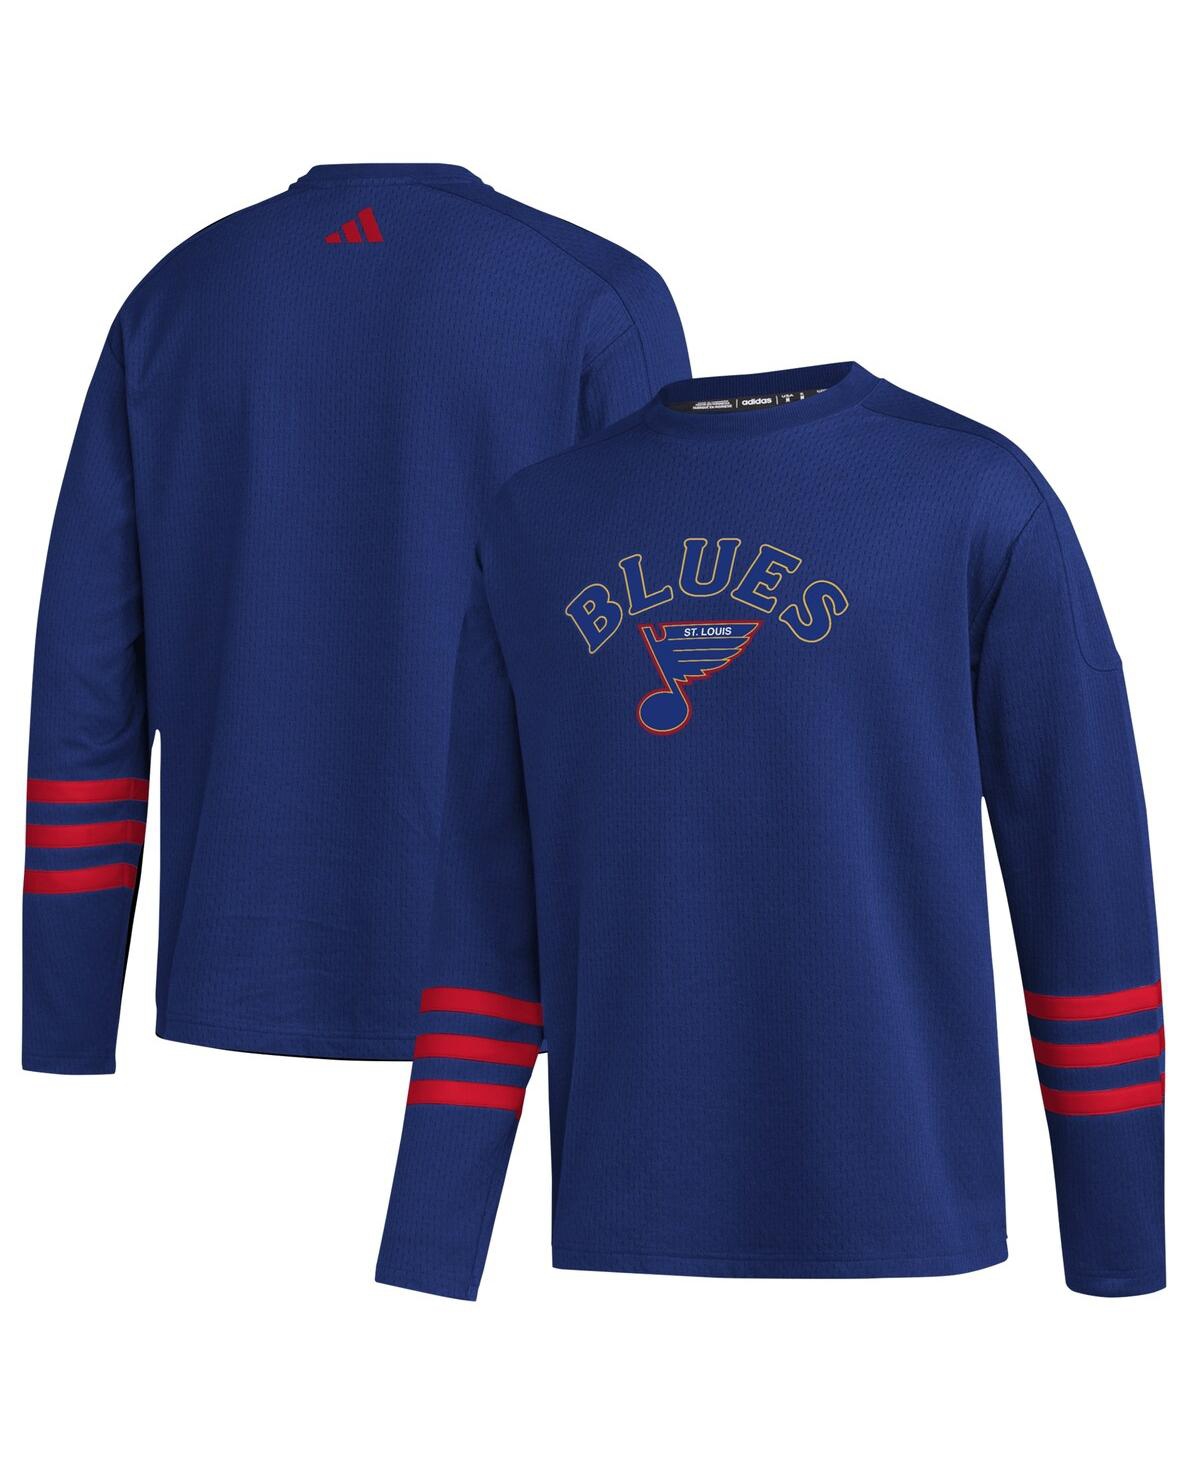 Men's adidas Blue St. Louis Blues AeroreadyÂ Pullover Sweater - Blue